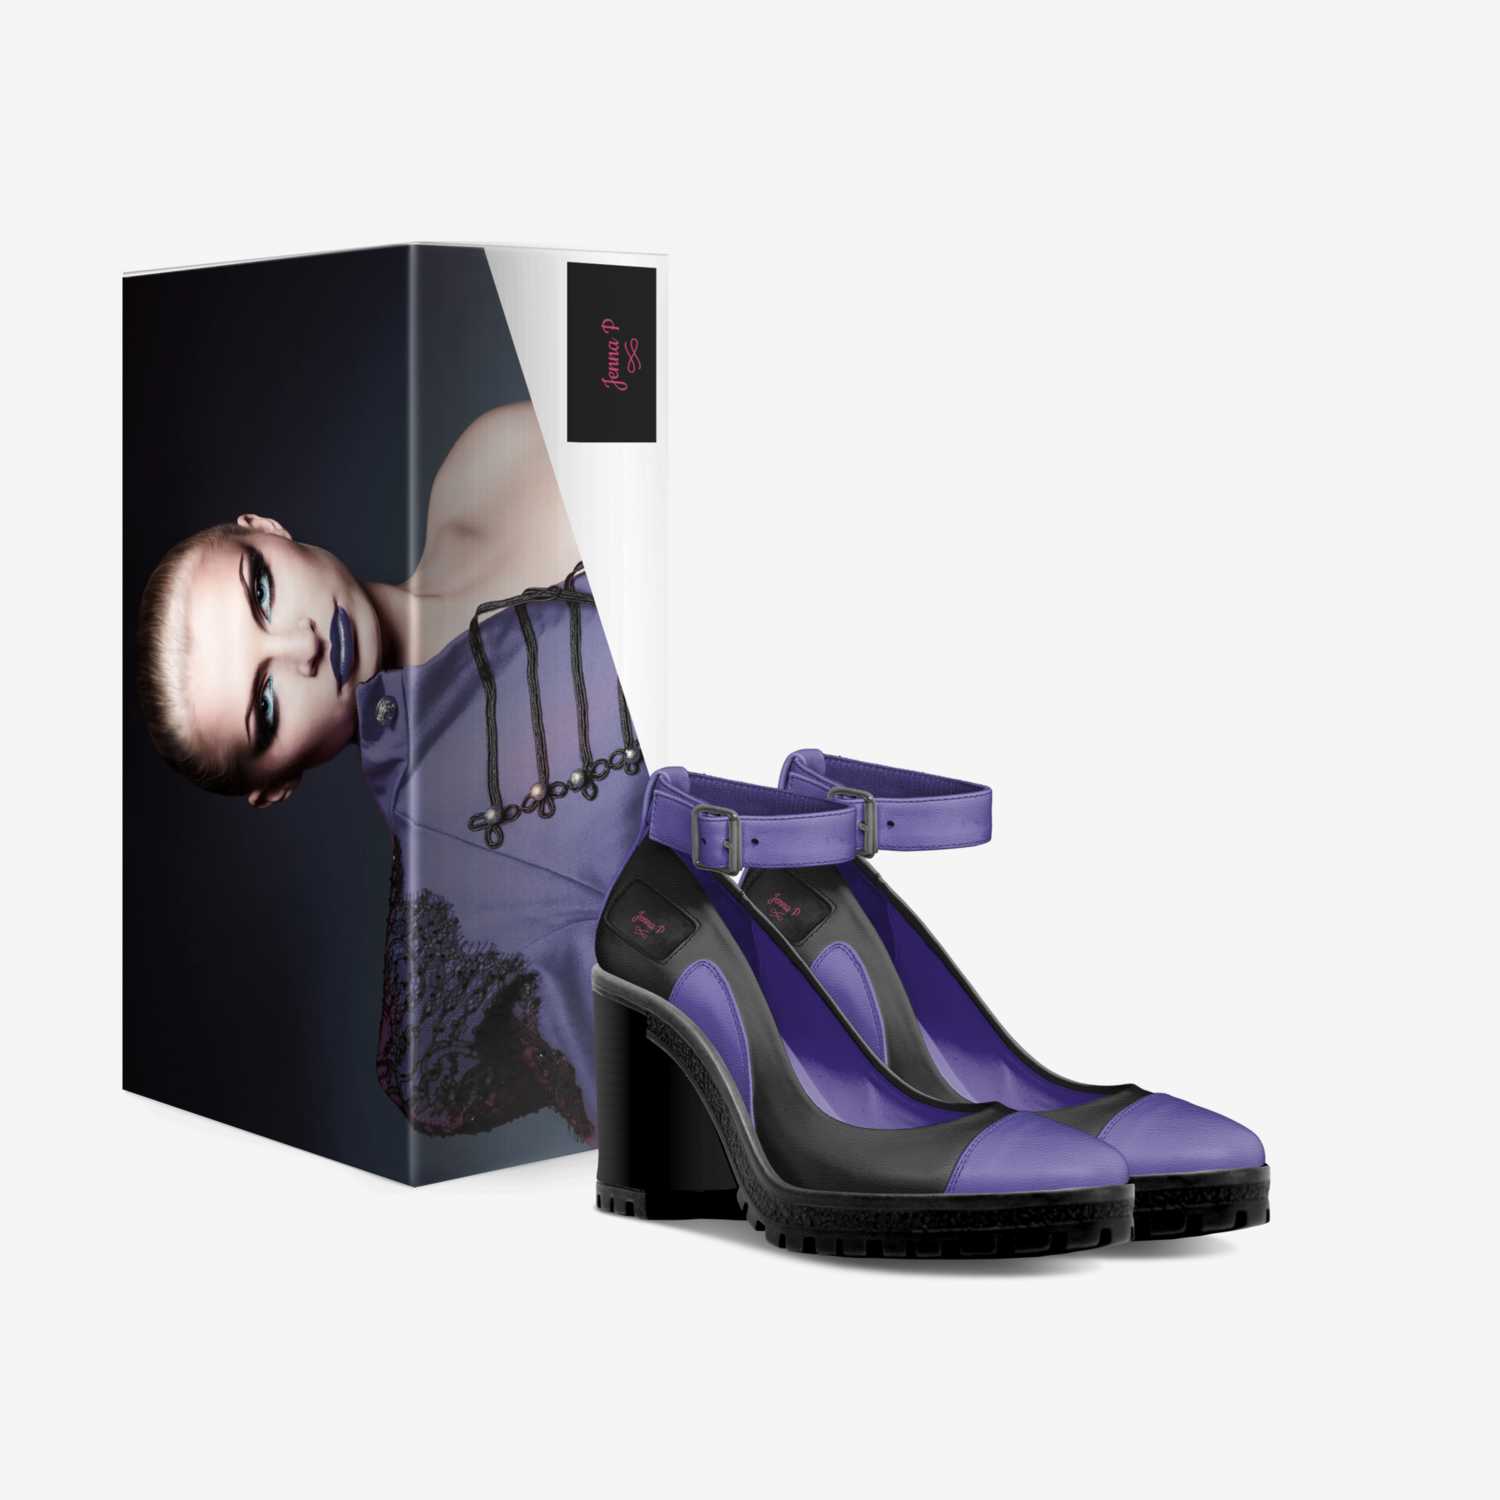 Jenna P custom made in Italy shoes by Jenna Powell | Box view